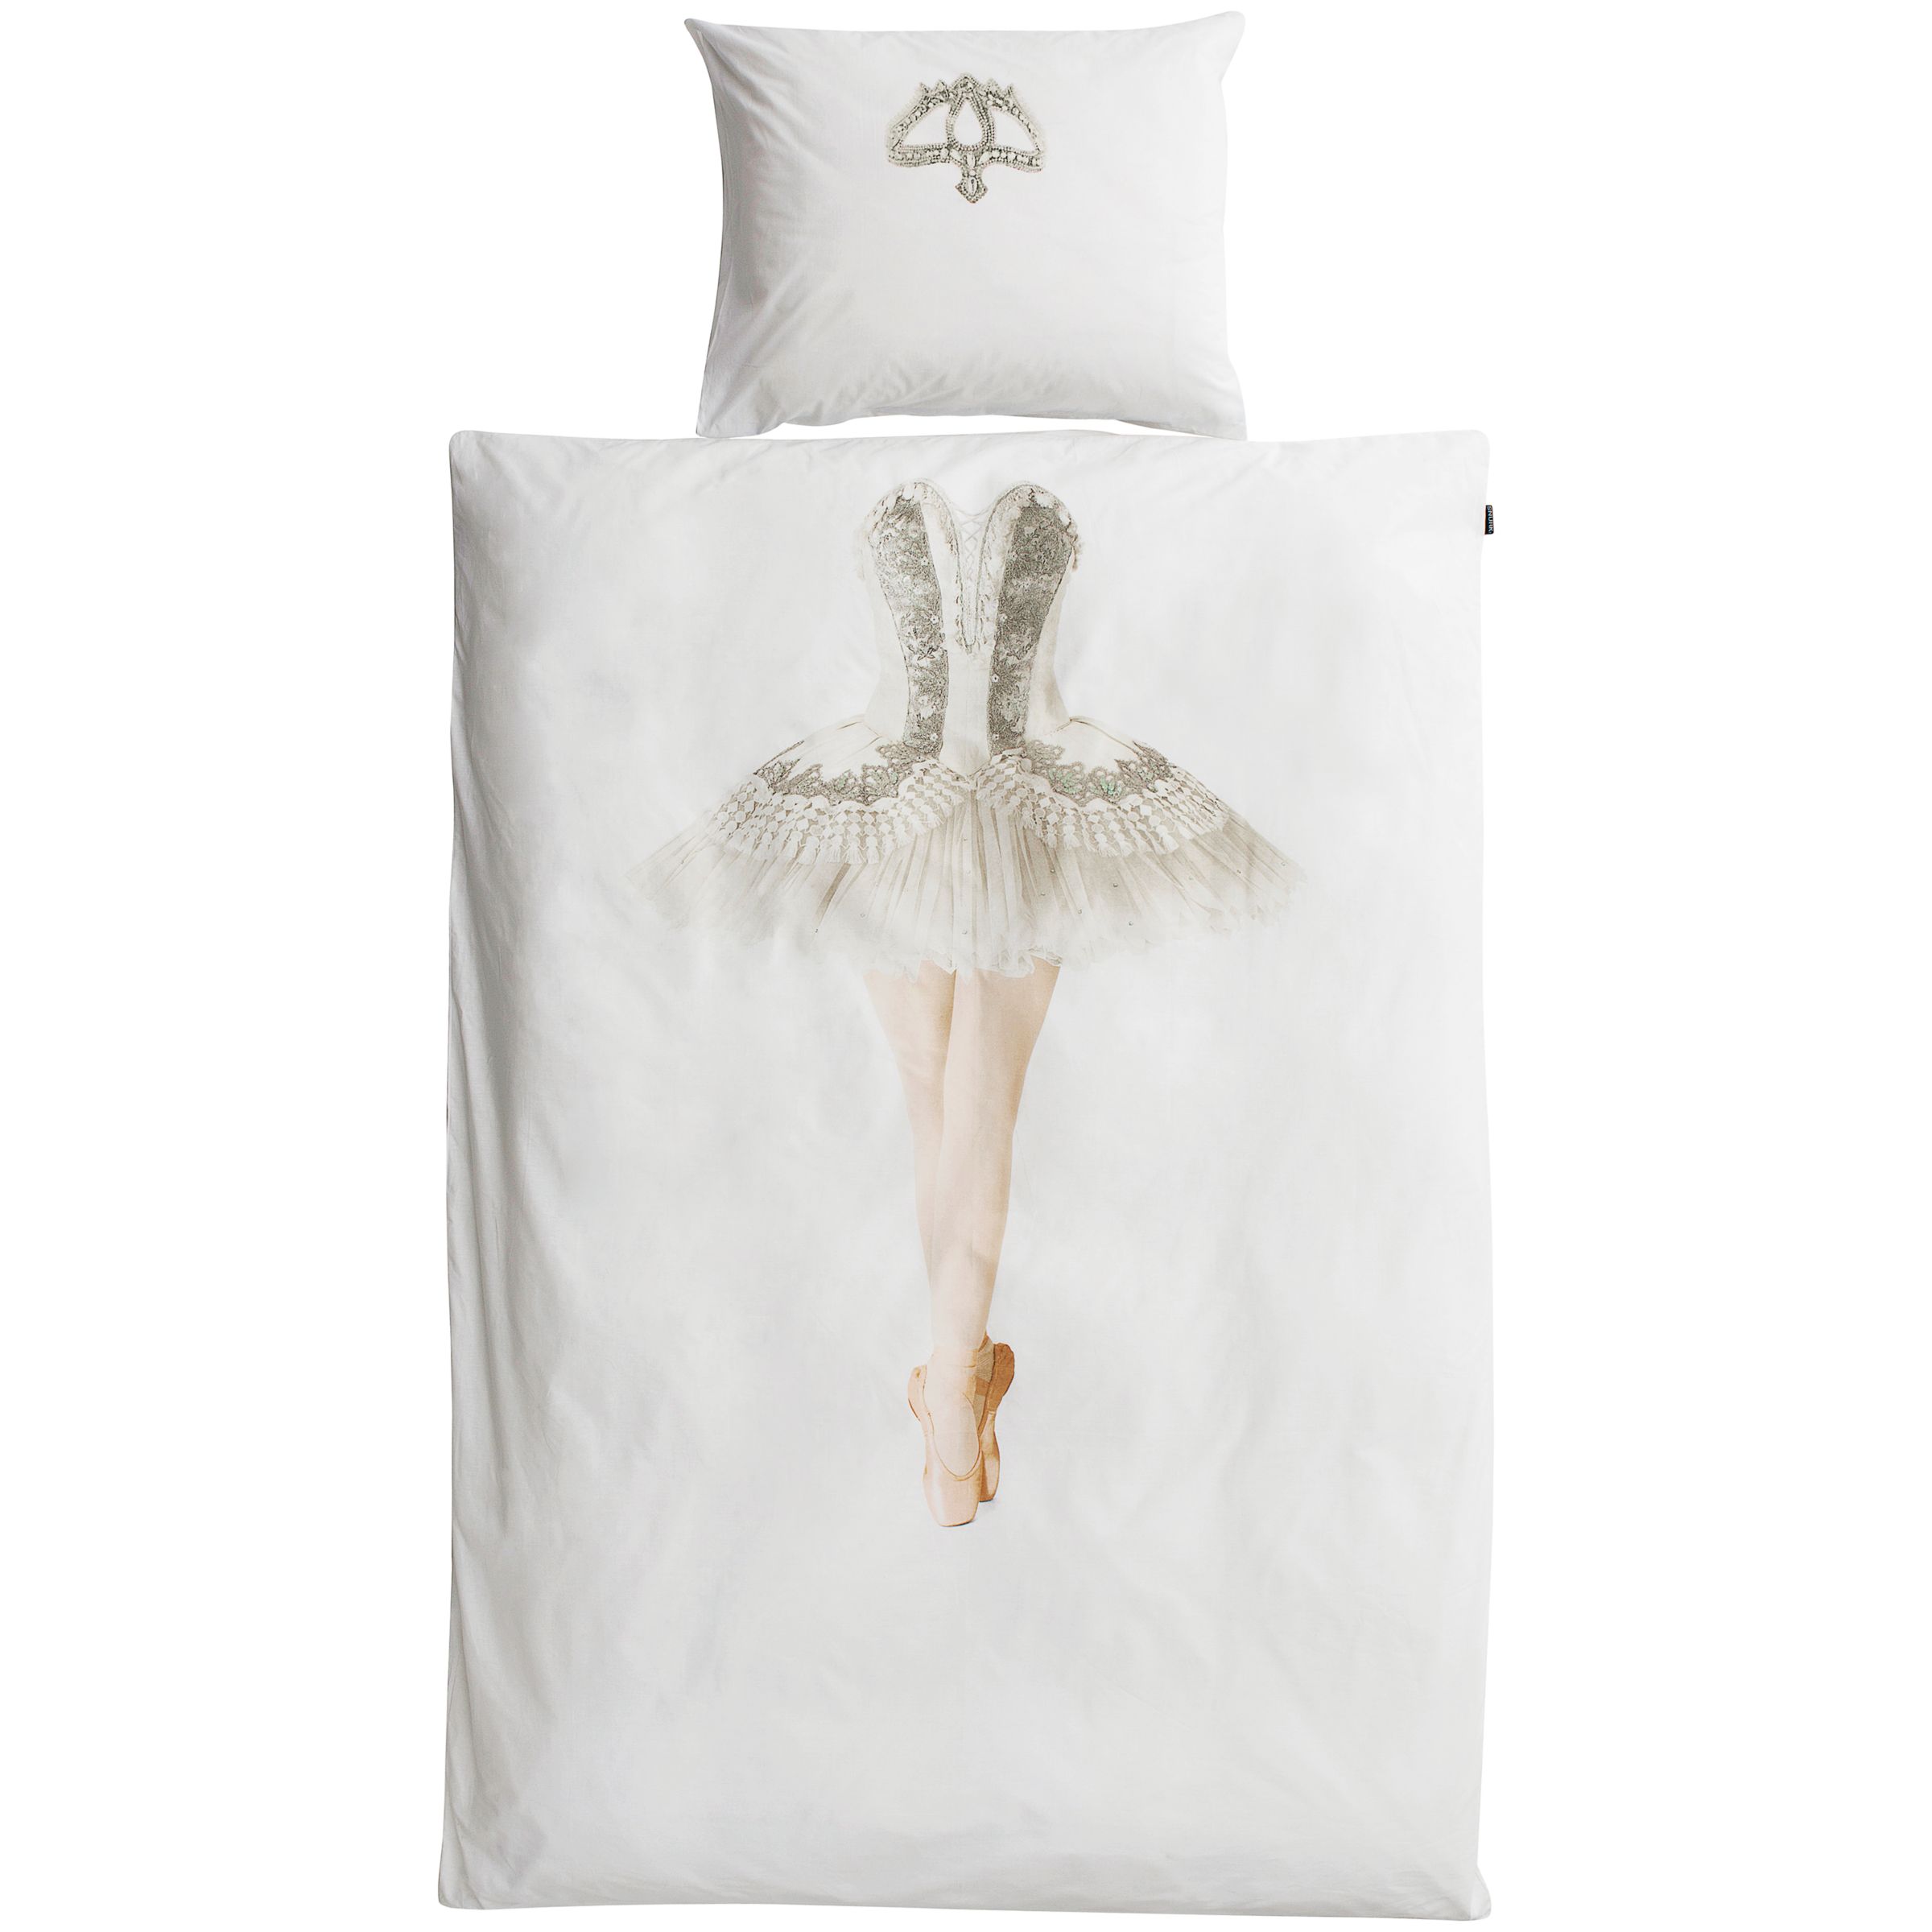 Snurk Ballerina Single Duvet Cover And Pillowcase Set At John